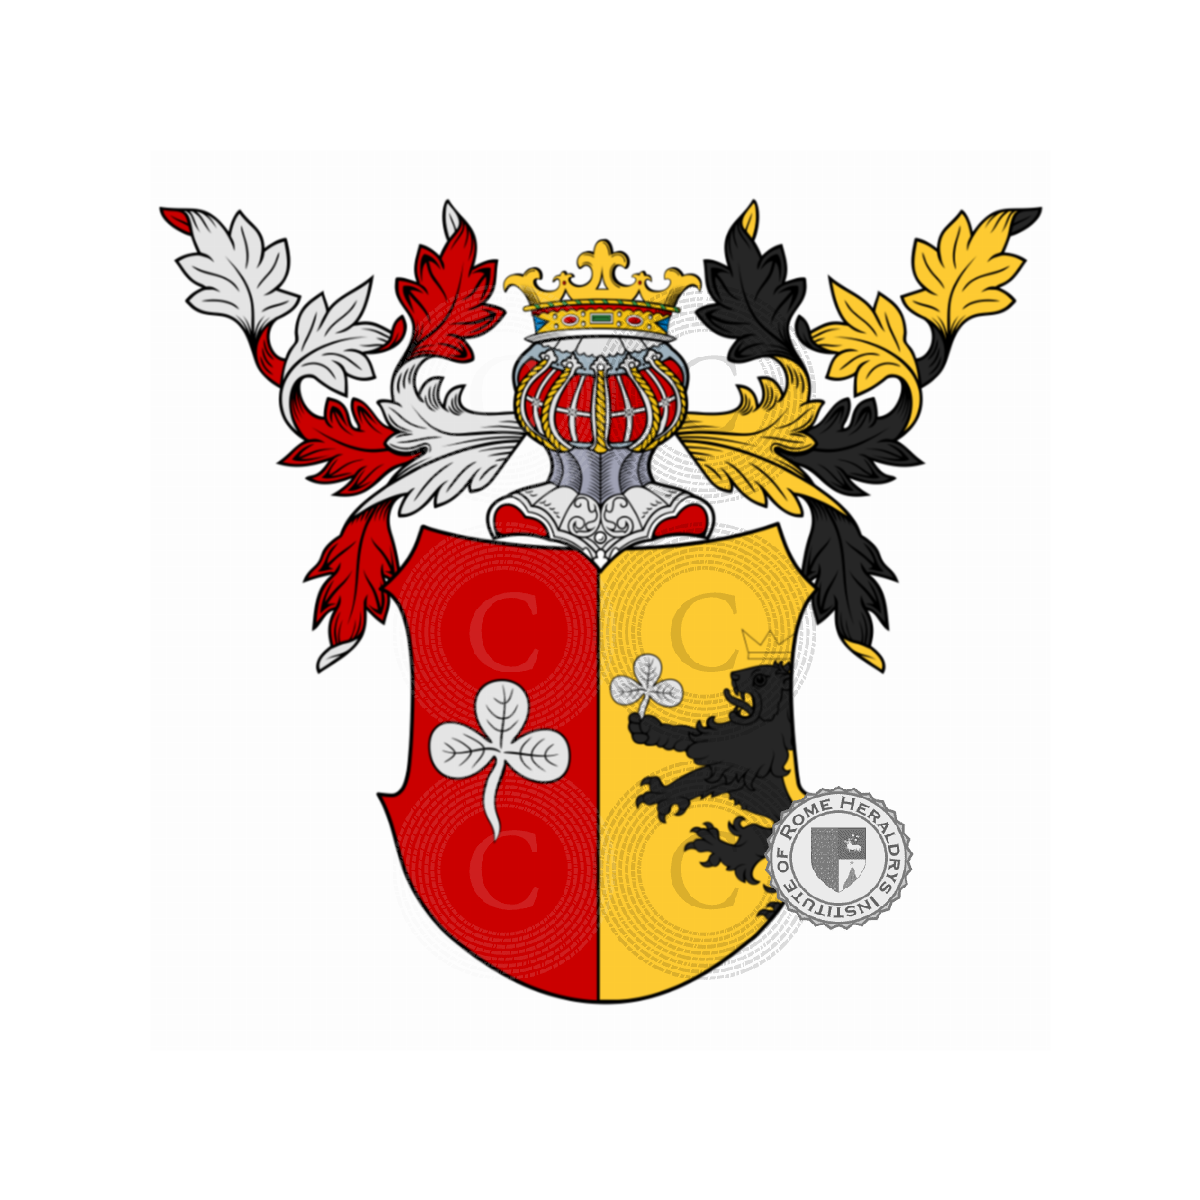 Wappen der FamilieSchittler, Schirtler,Schittler